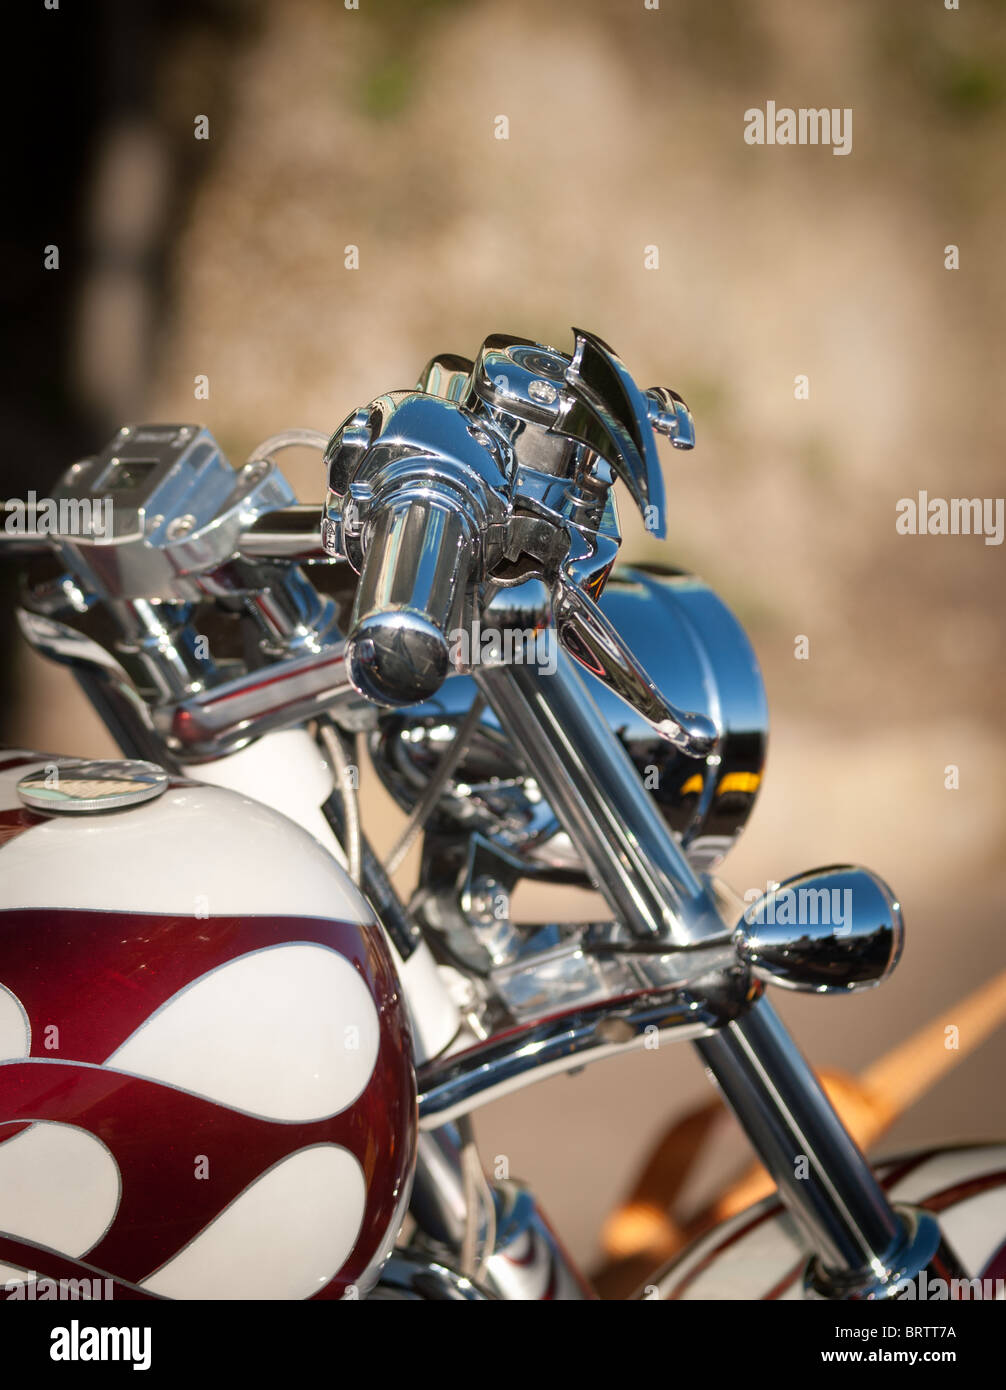 detail of motorcycle handlebars Stock Photo